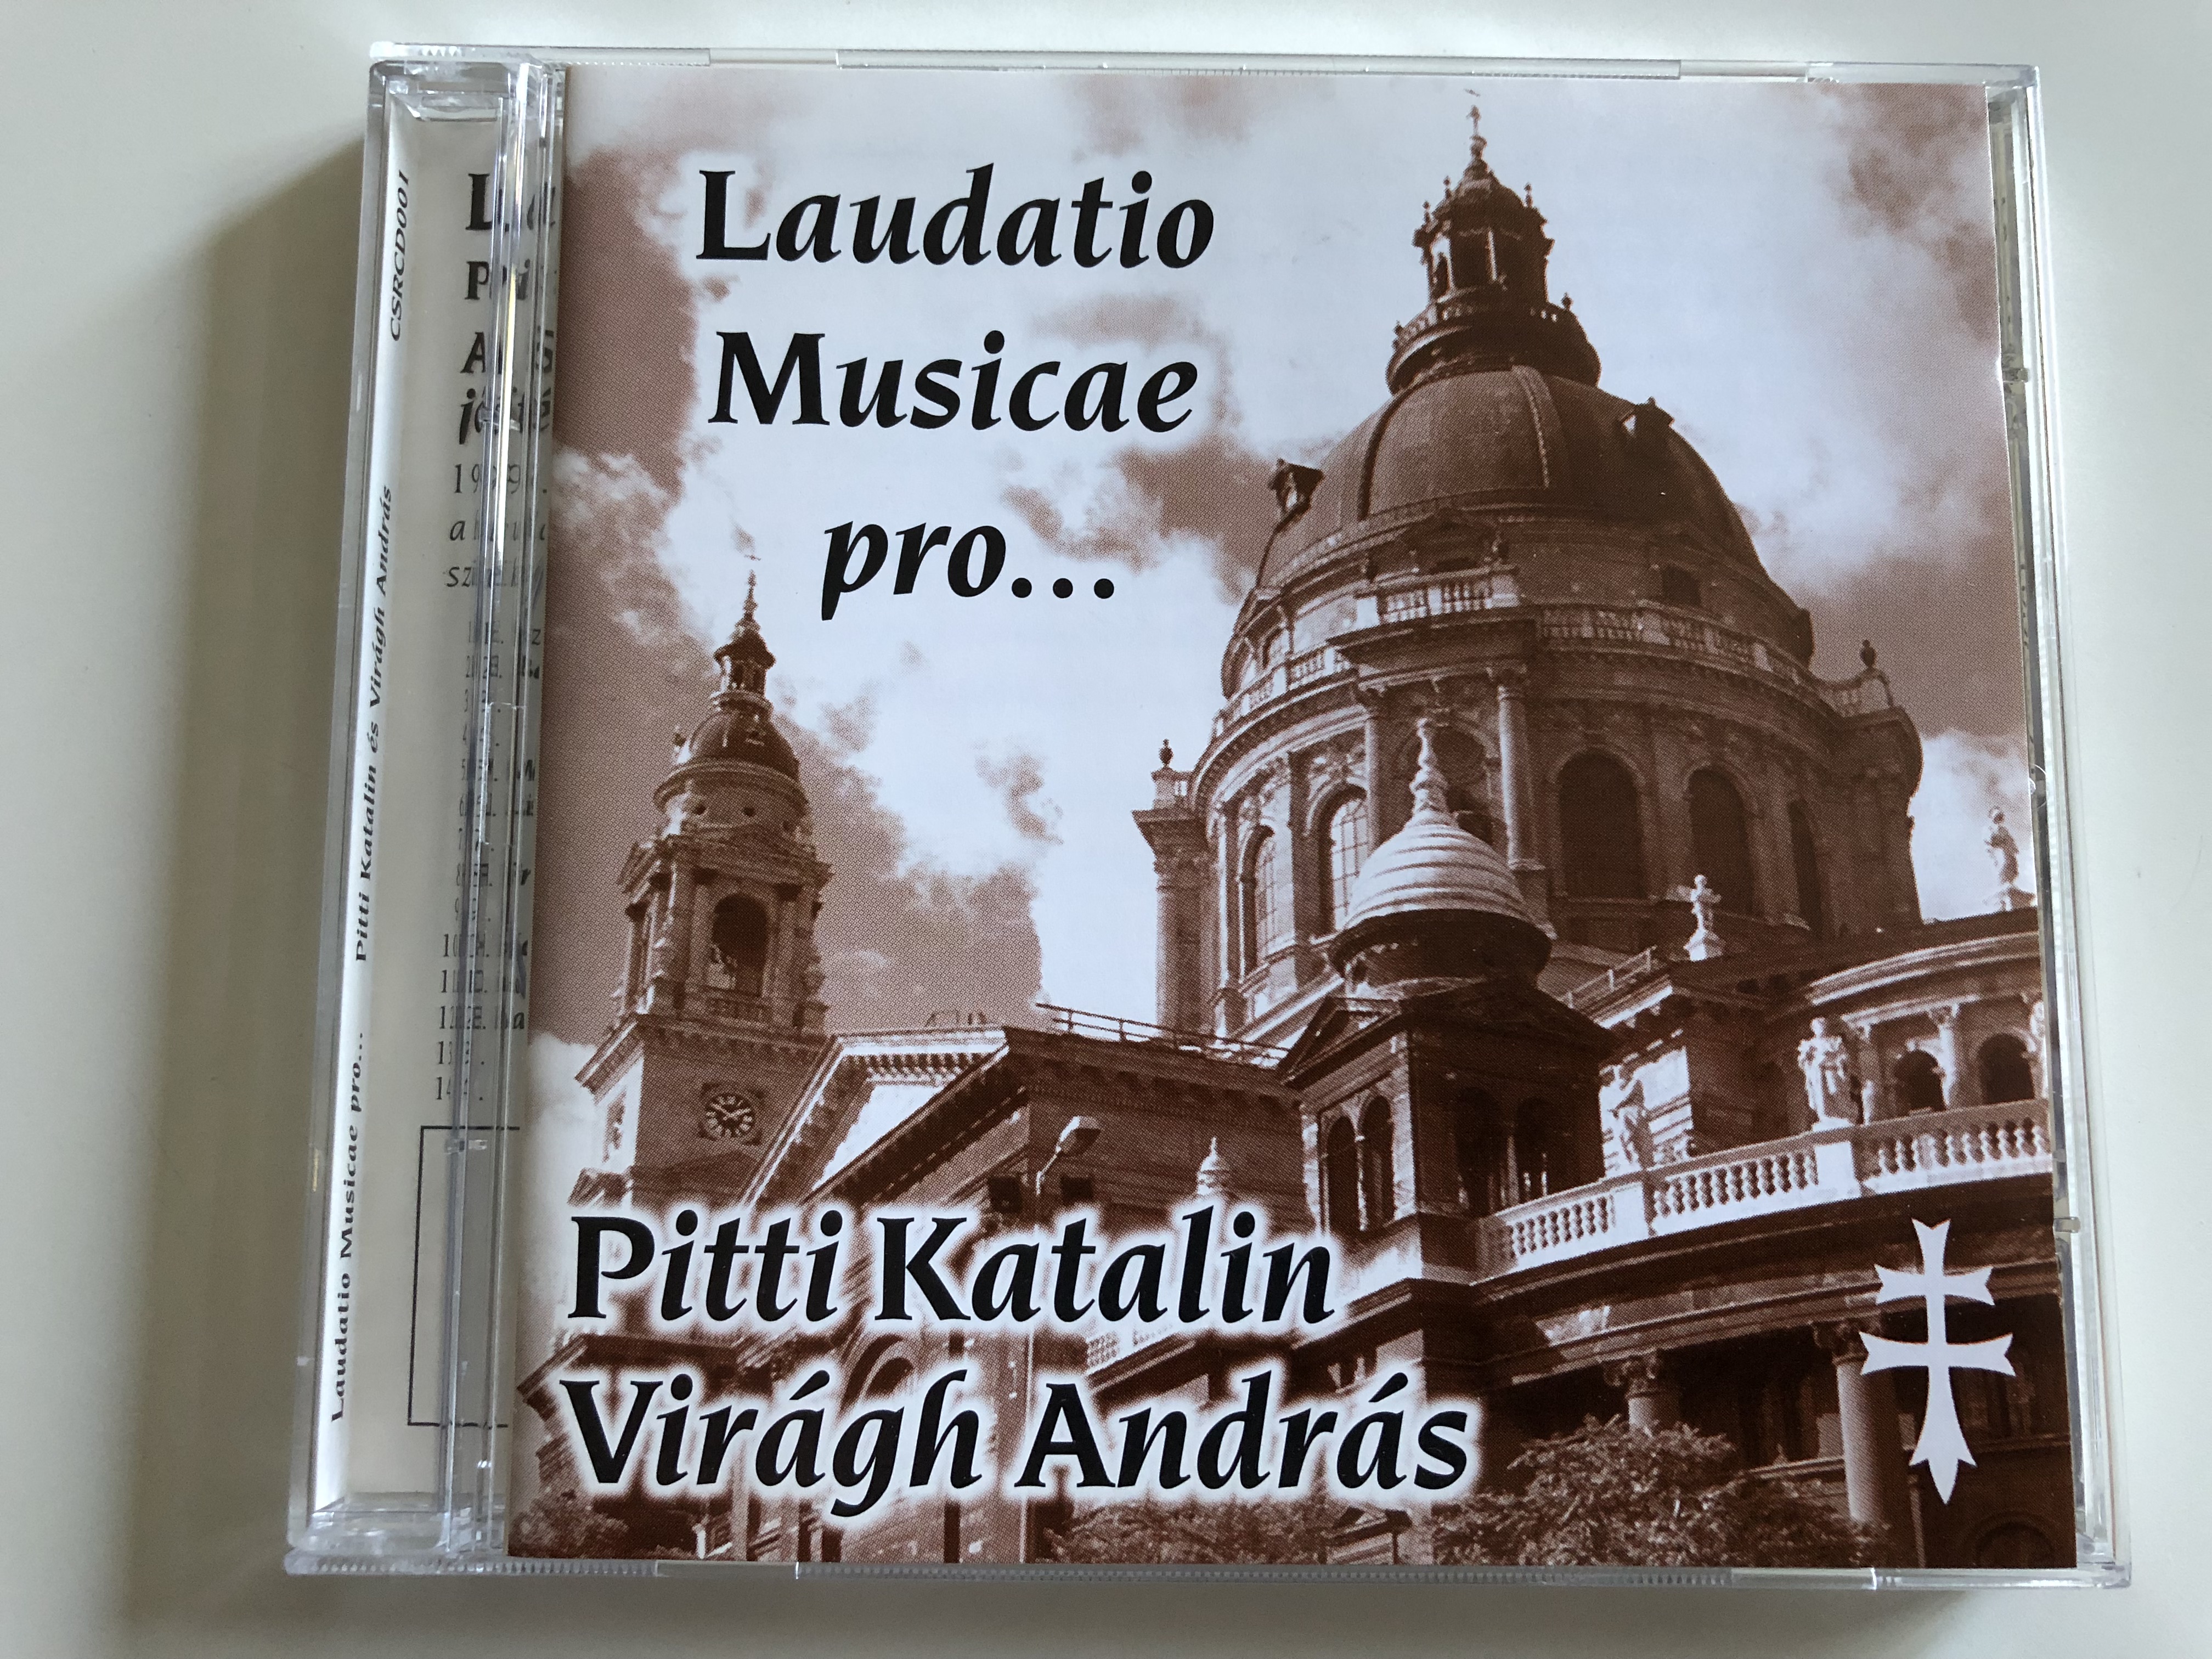 laudatio-musicae-pro...-pitti-katalin-viragh-andras-vtcd-audio-cd-1999-csrcd001-1-.jpg